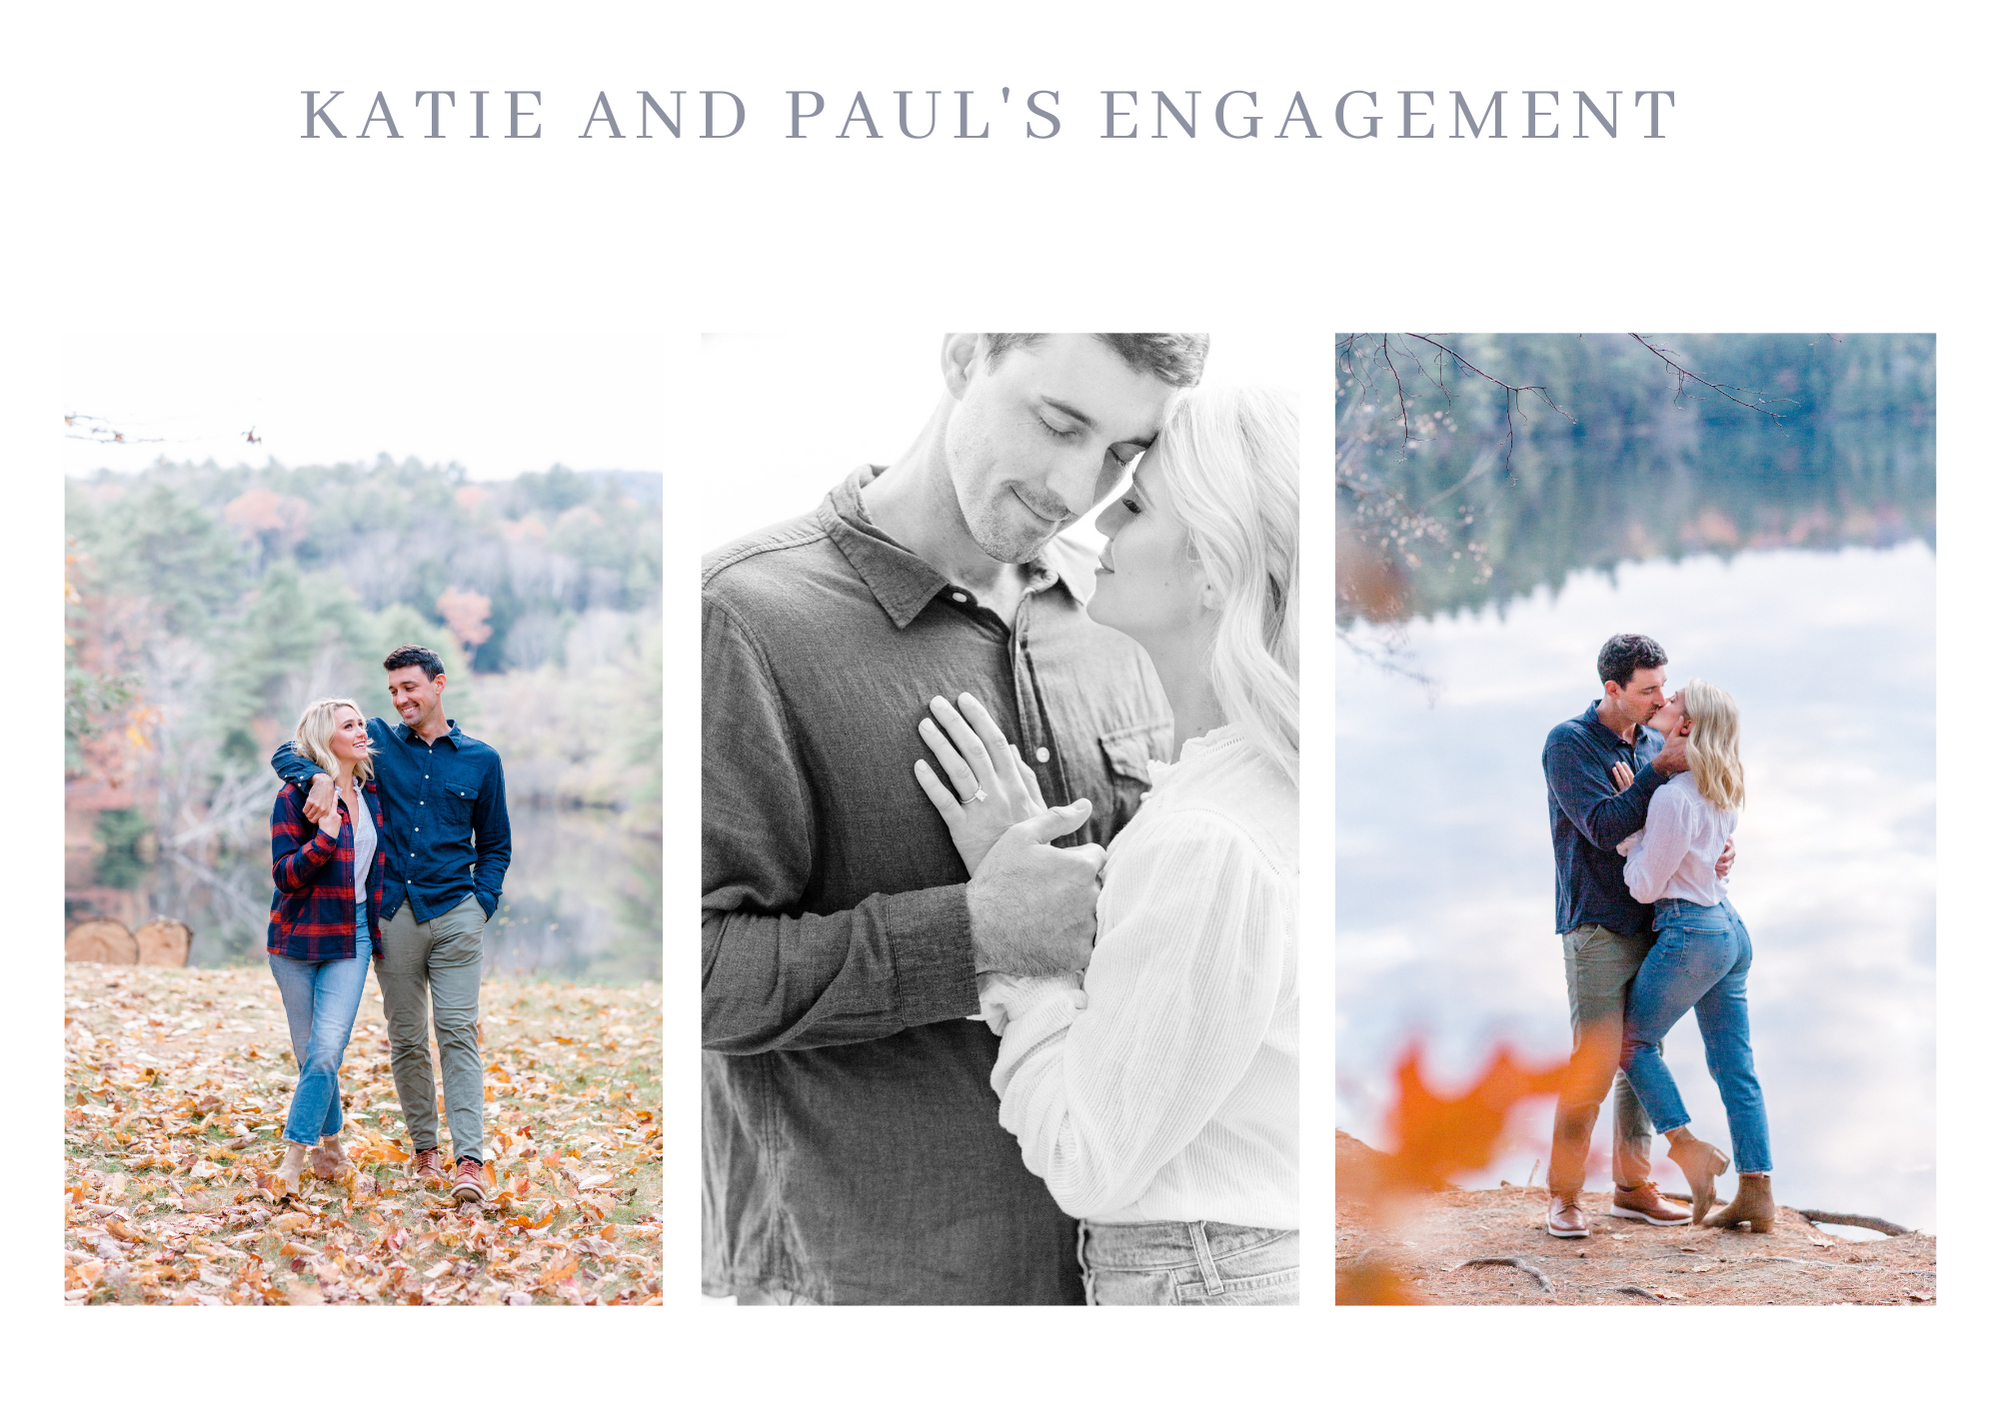 Vermont engagement photographer collage